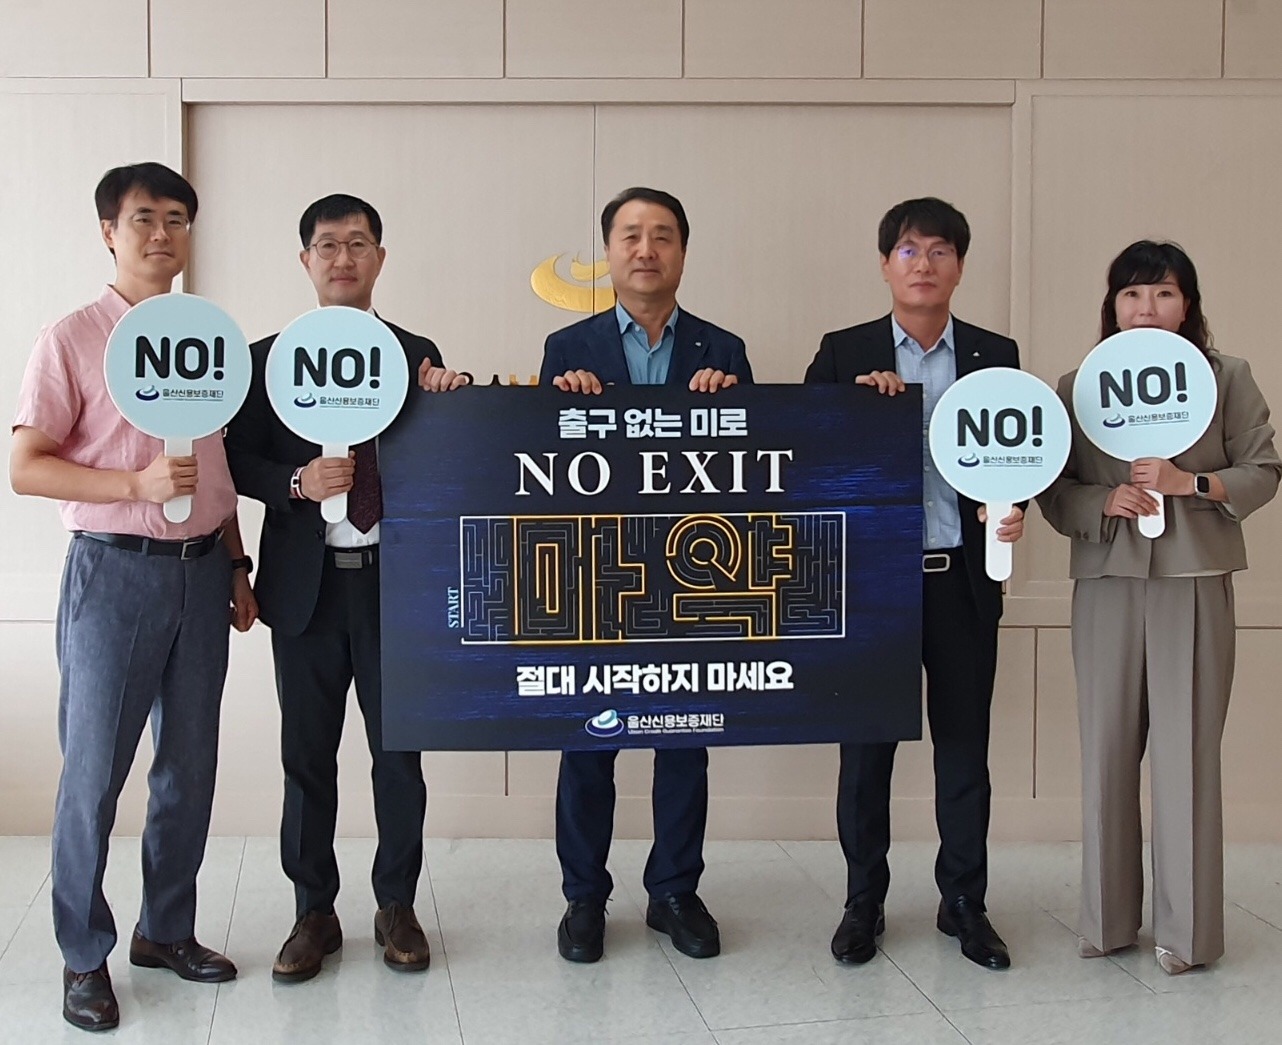 'NO EXIT' 마약 근절 릴레이 캠페인 참여